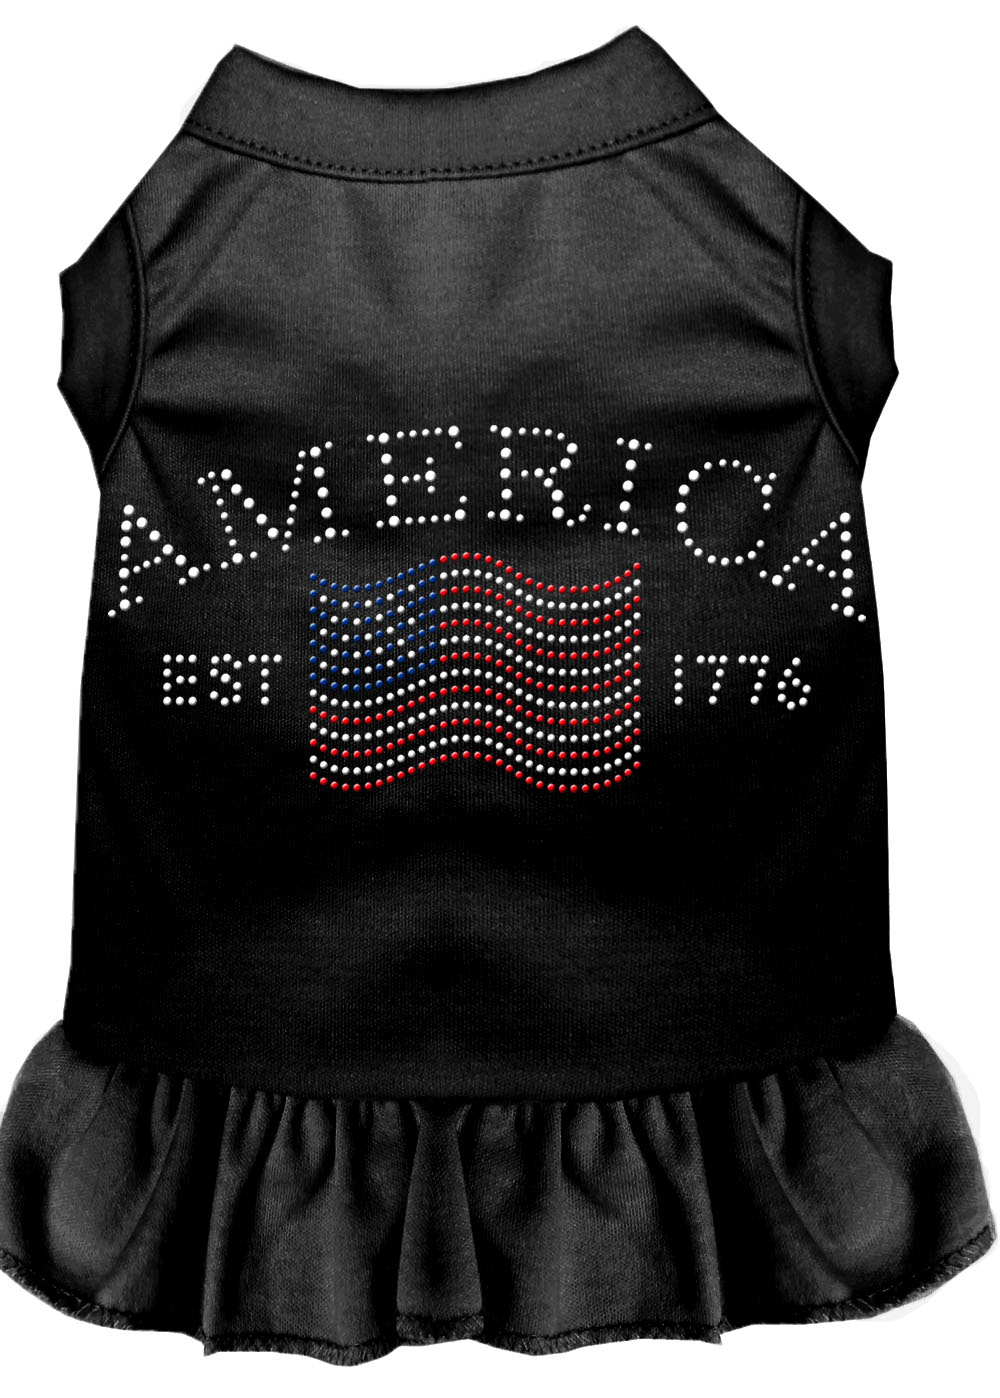 Classic America Rhinestone Dress Black Sm